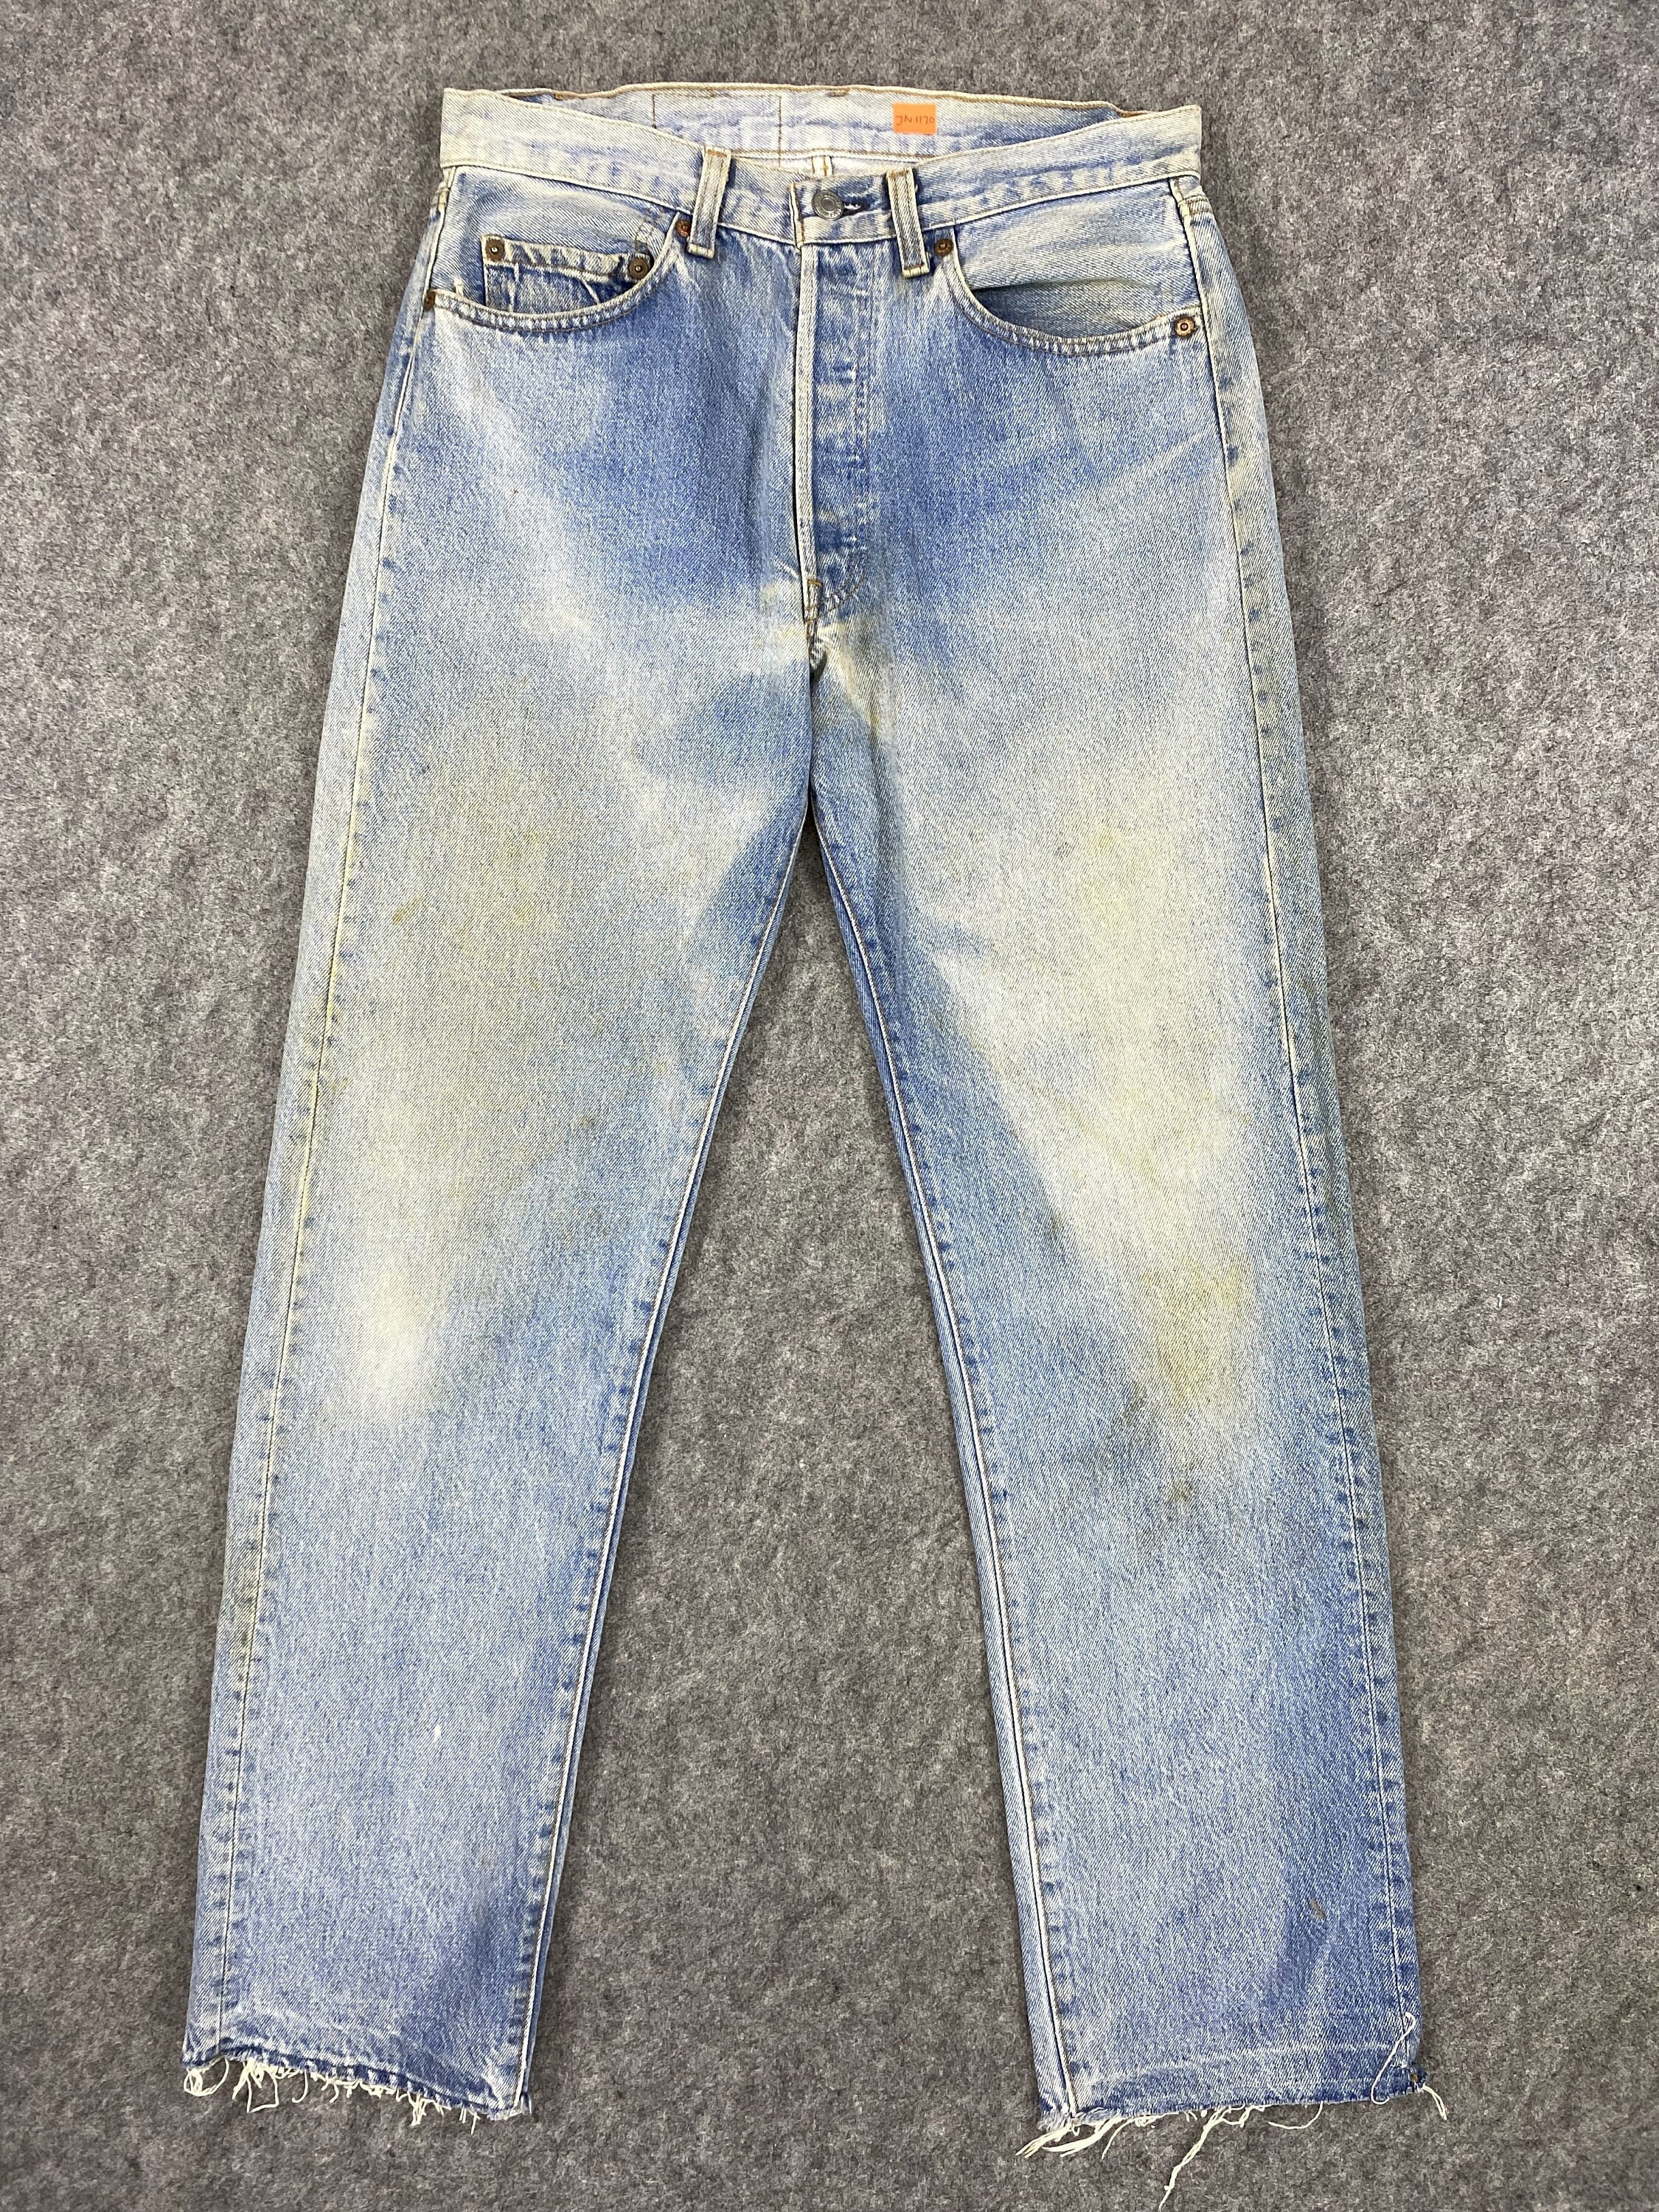 501® Skinny Women's Jeans - Light Wash